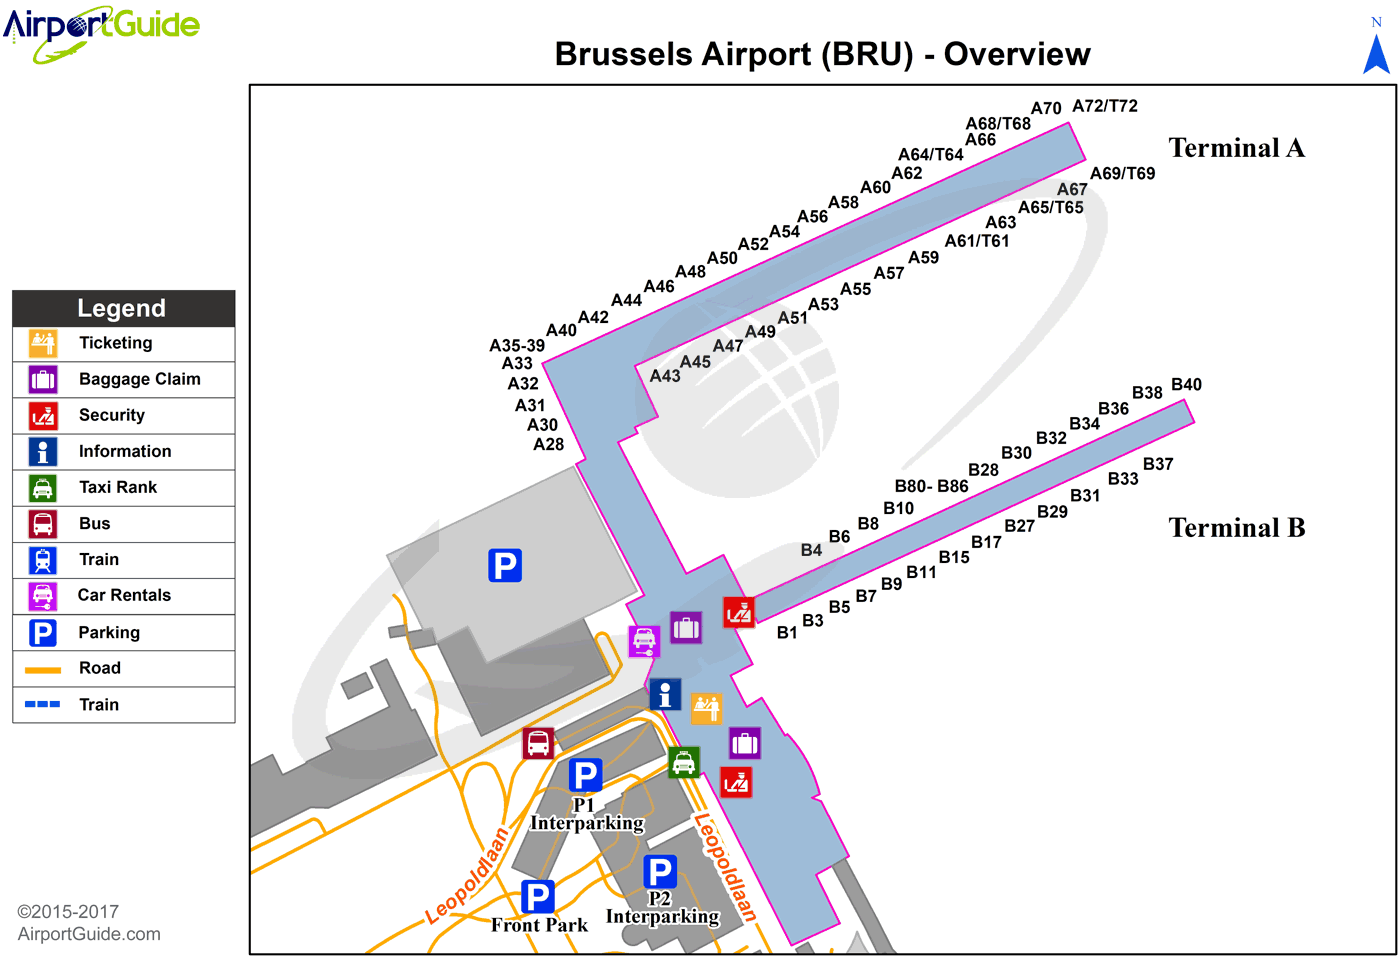 Brussels - Rotterdam (BRU) Airport Terminal Map - Overview